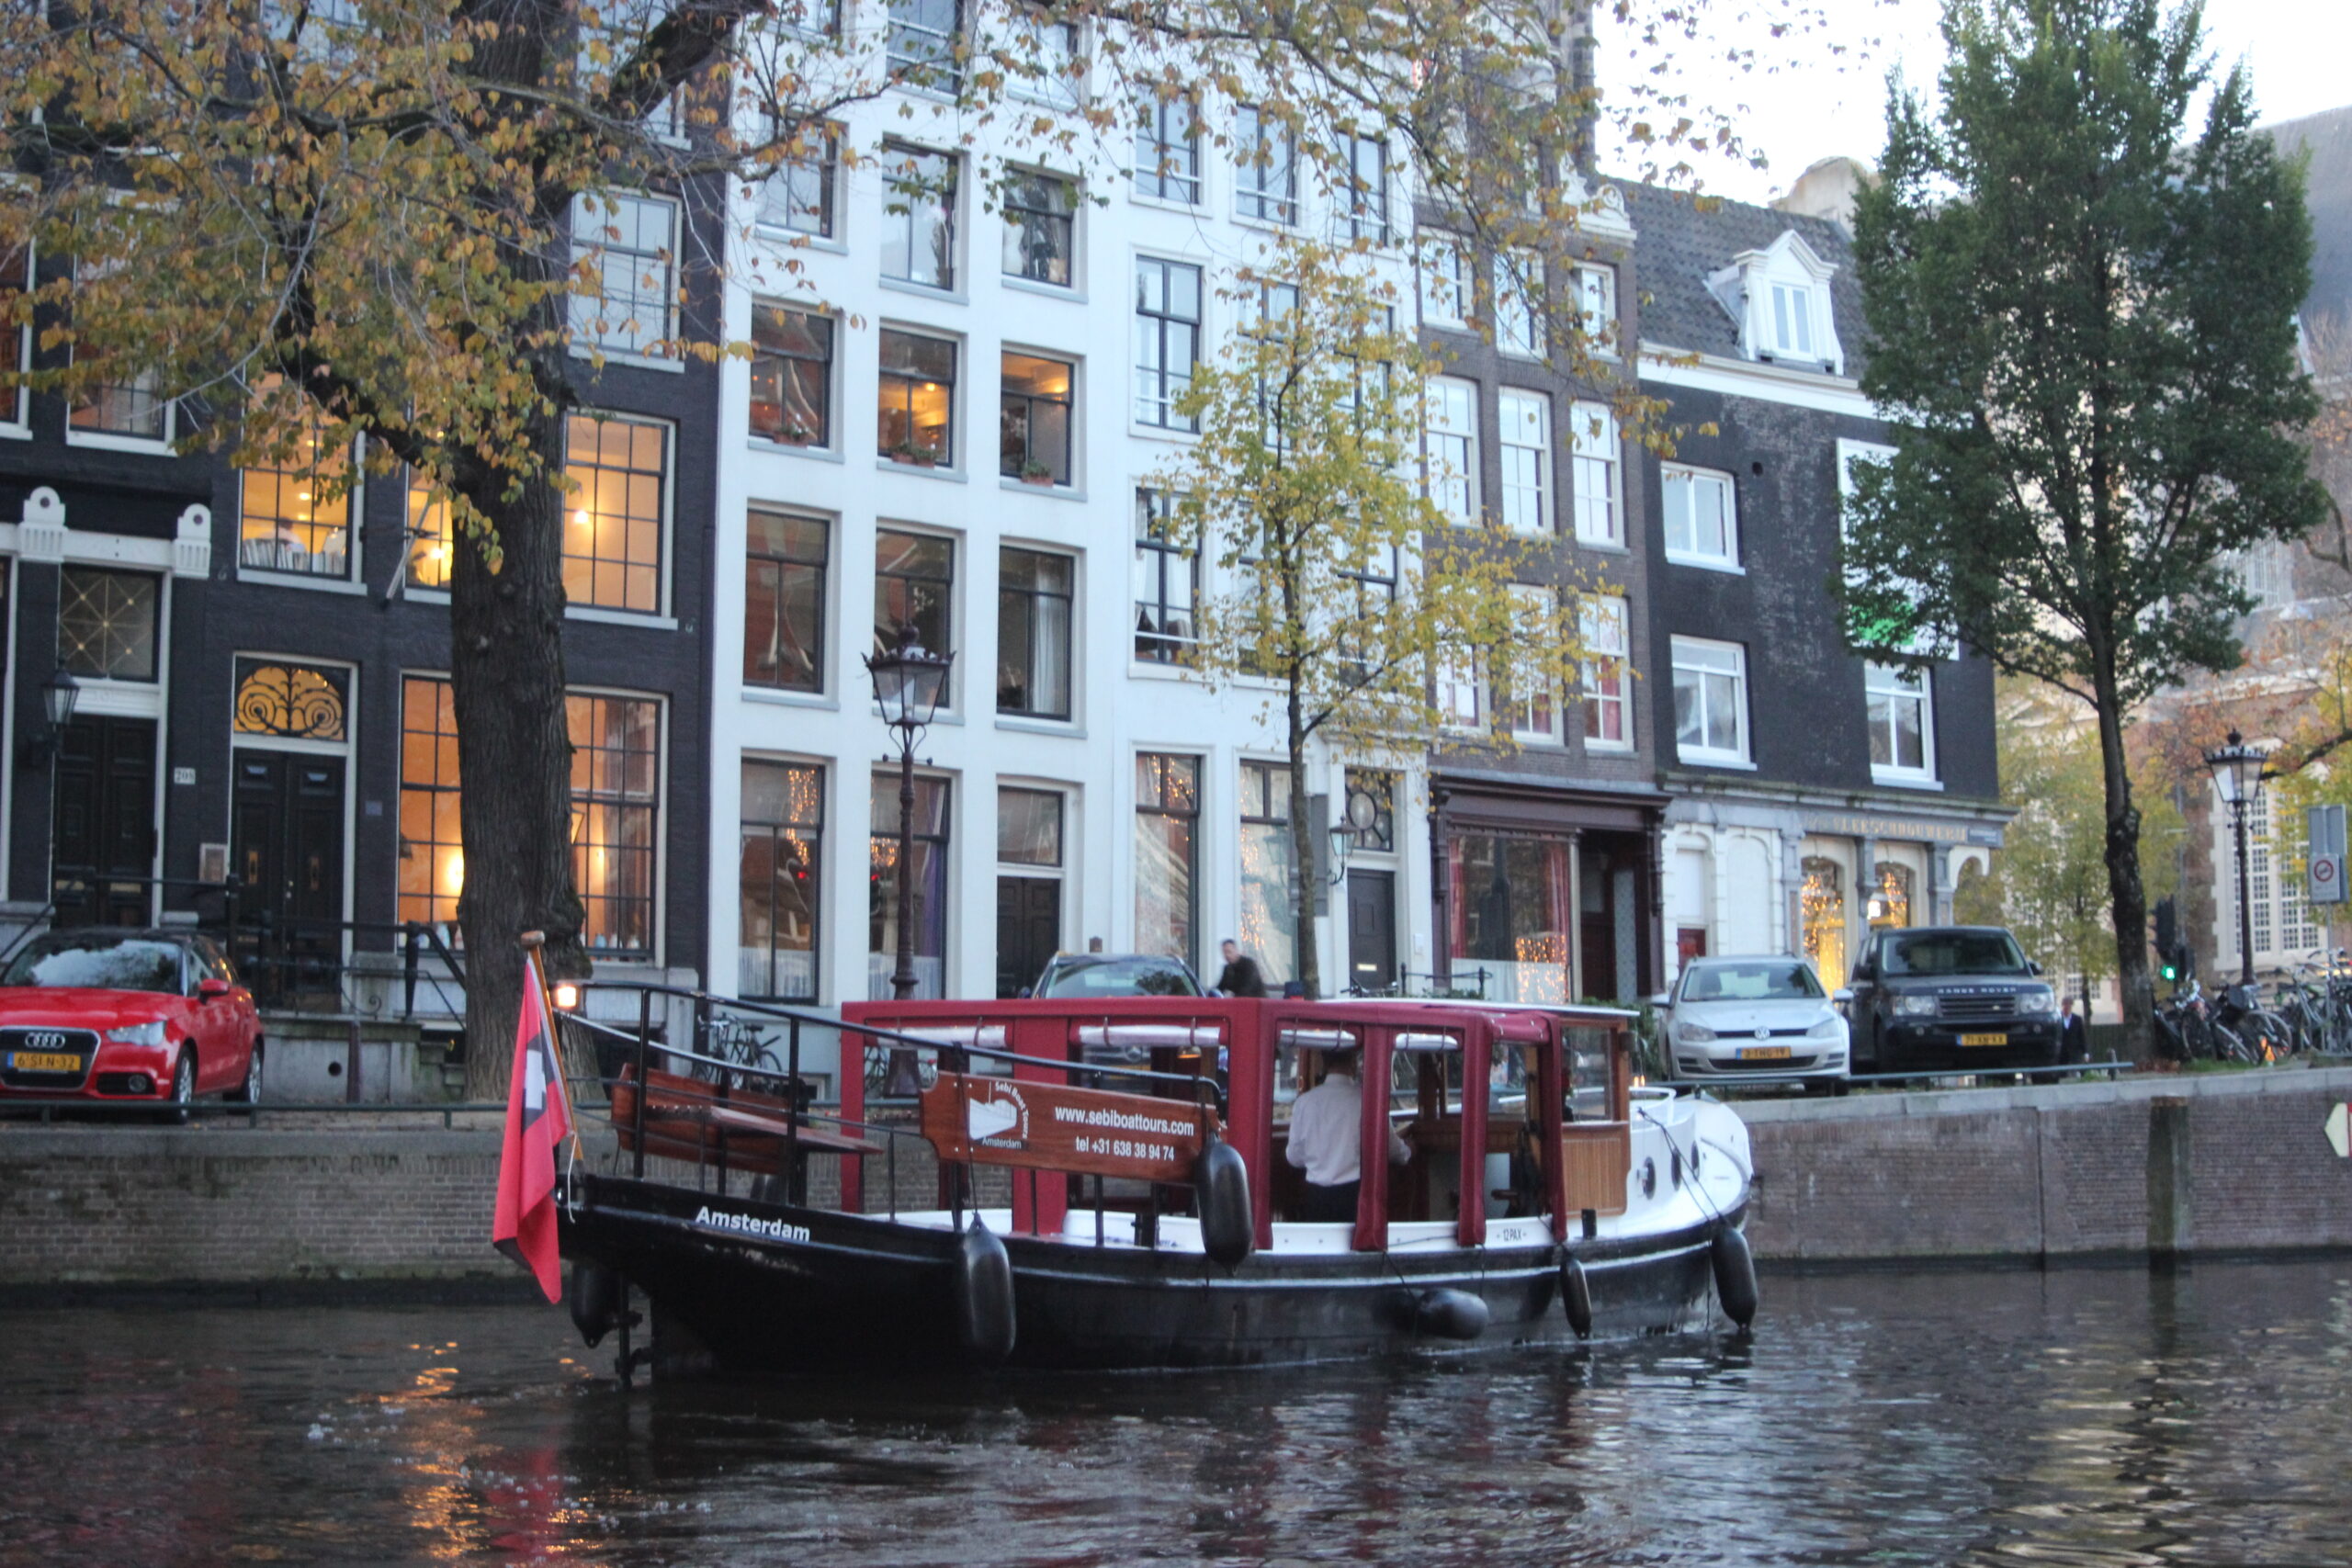 sebi boat tours amsterdam. electric boat